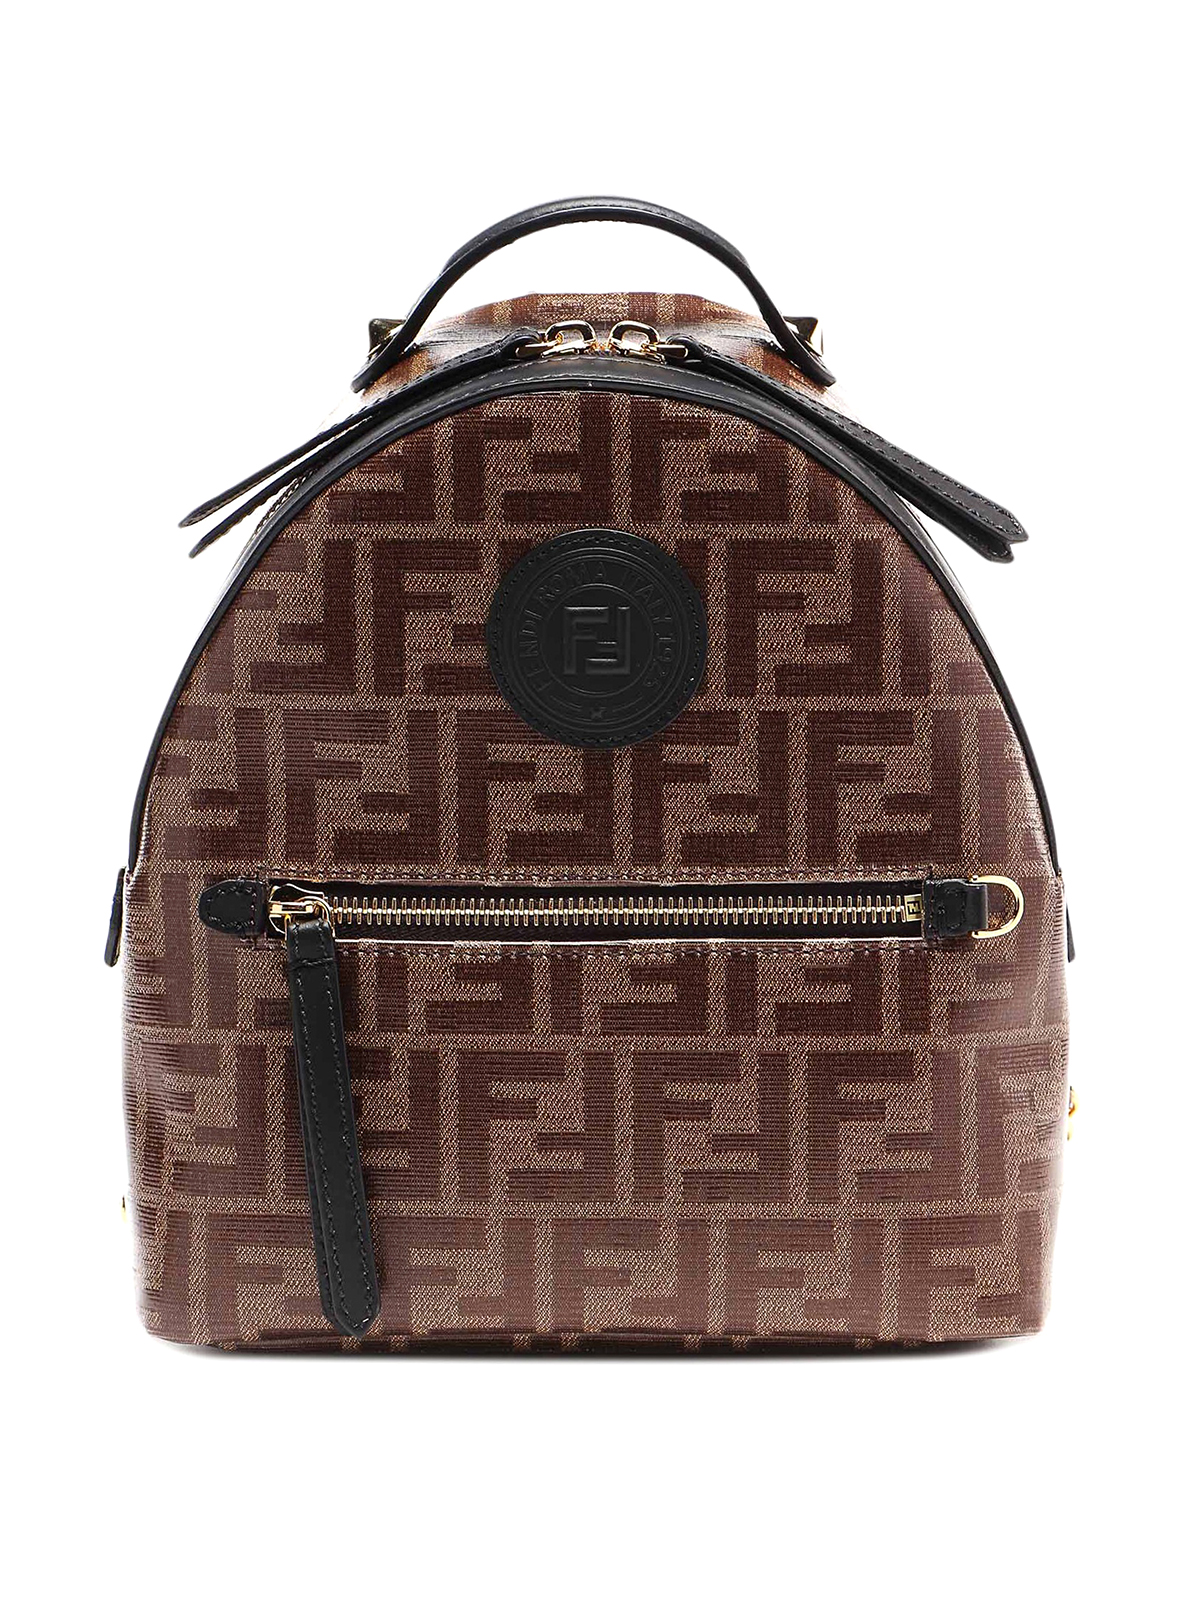 Fendi Leather Backpacks for Women | Mercari